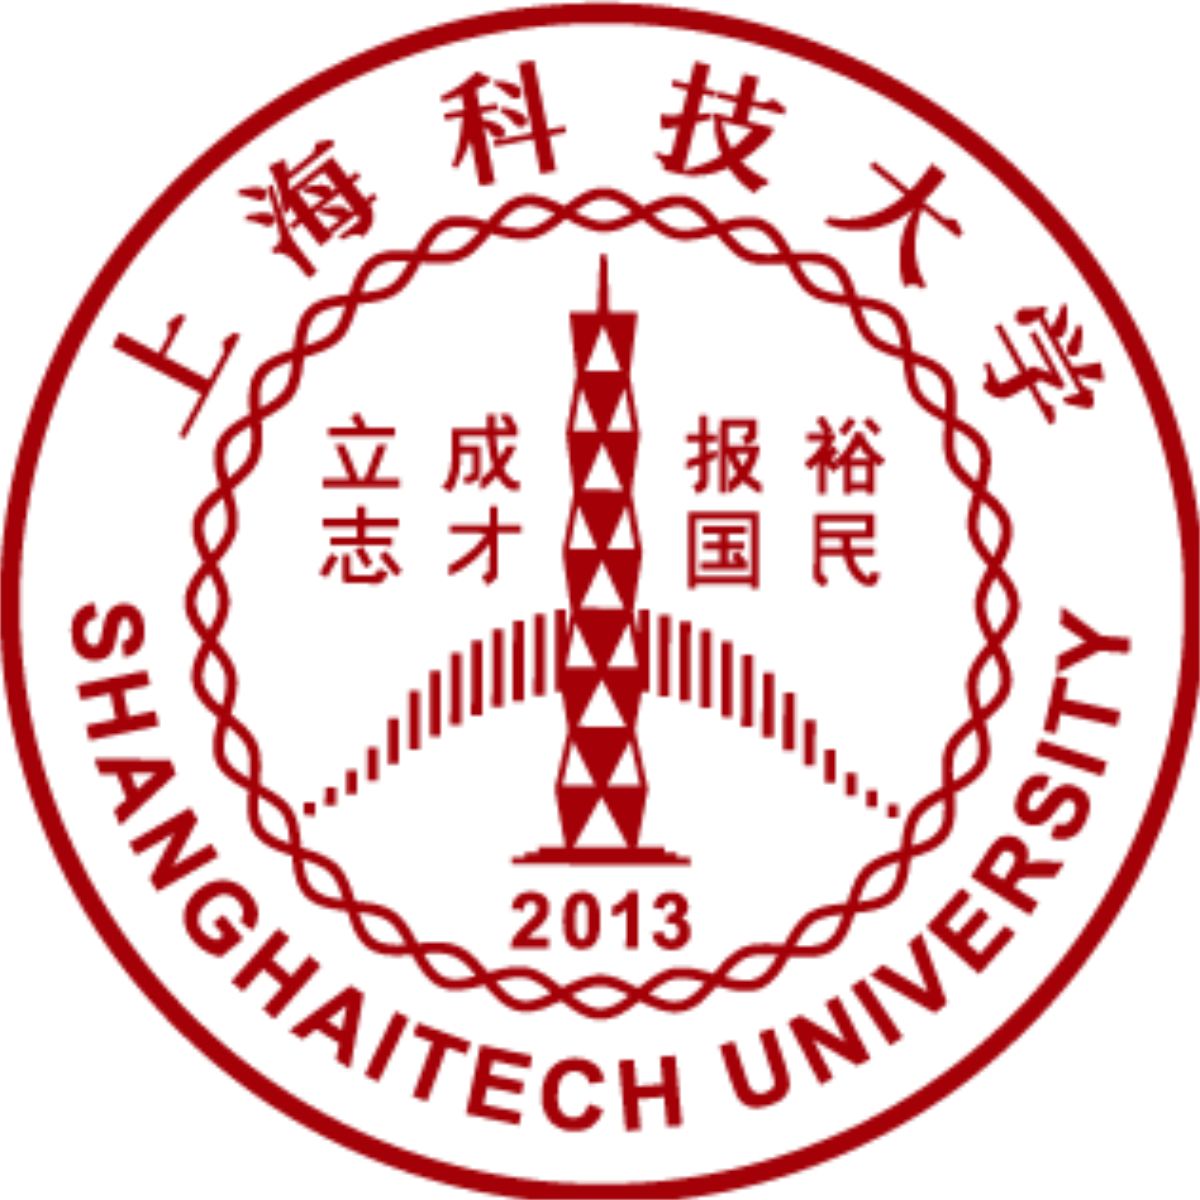 Shanghai Tech University